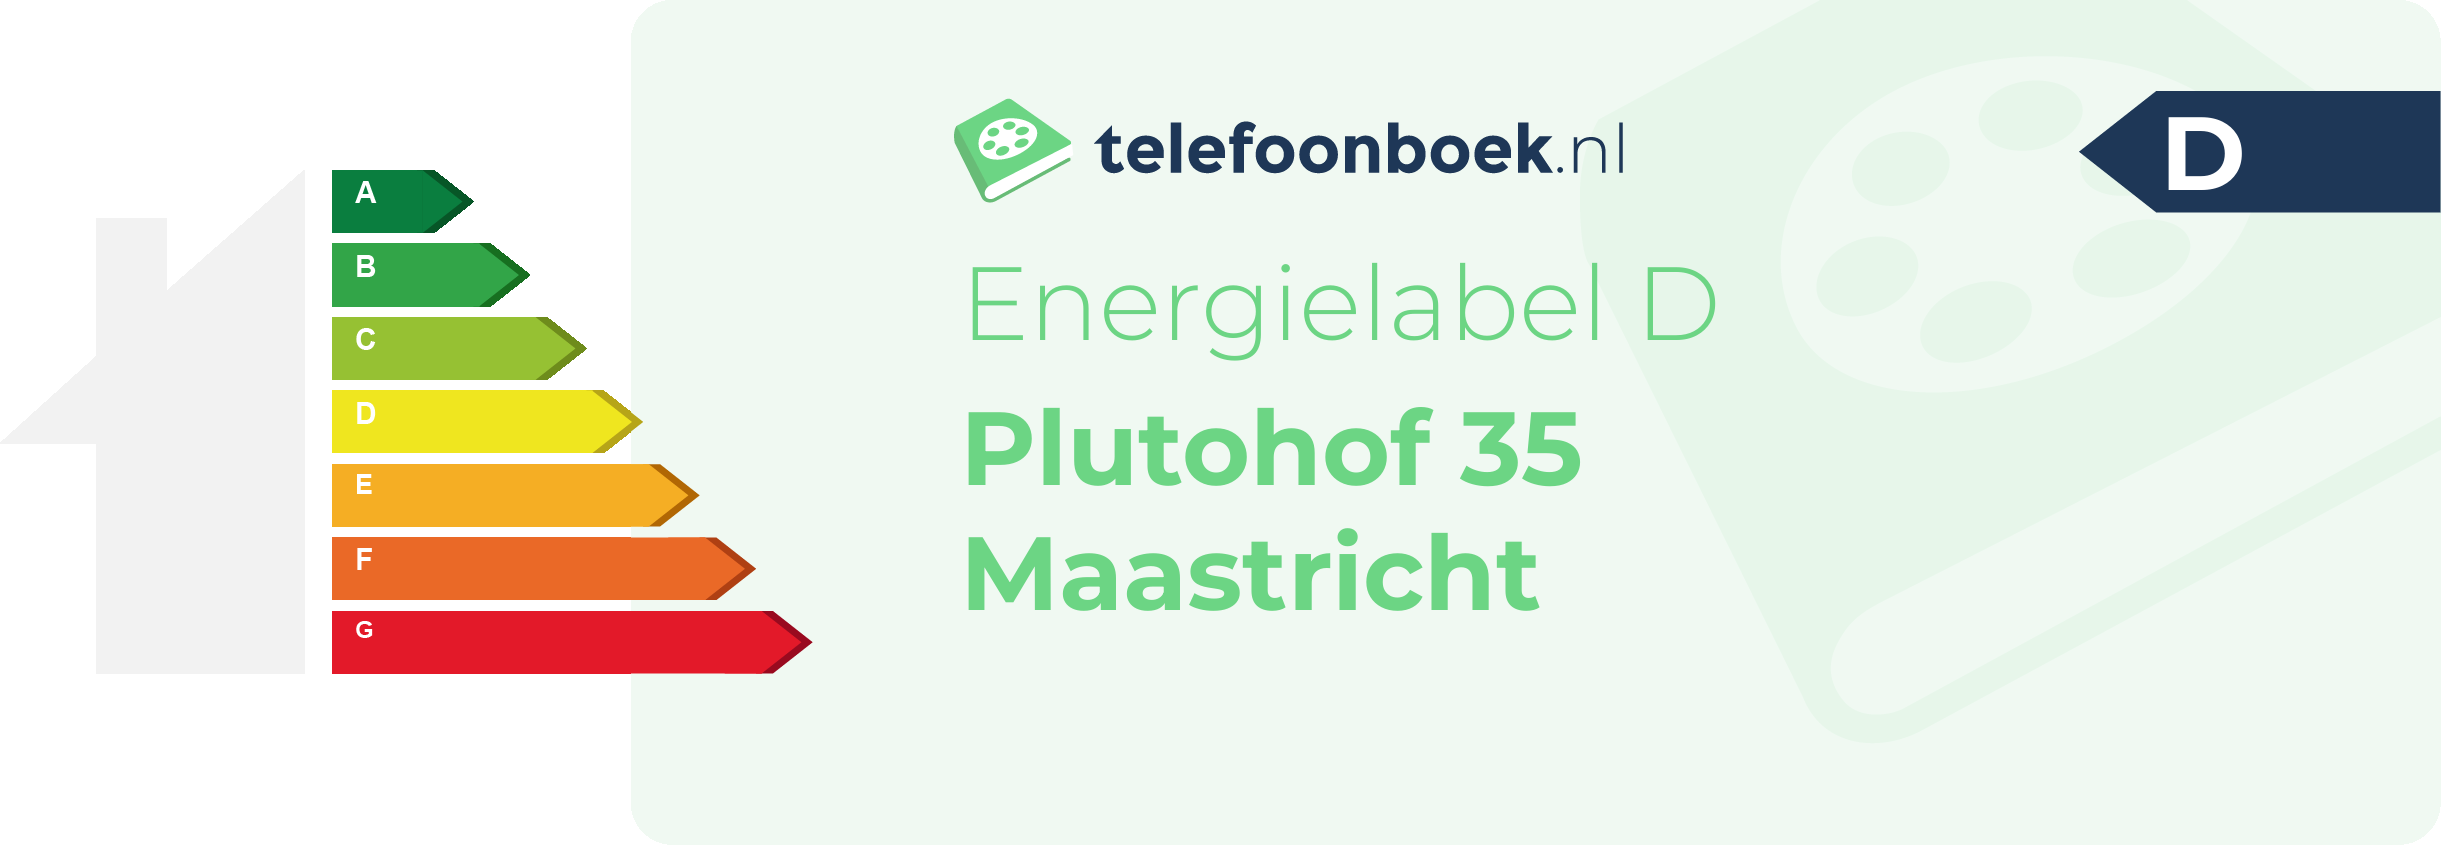 Energielabel Plutohof 35 Maastricht